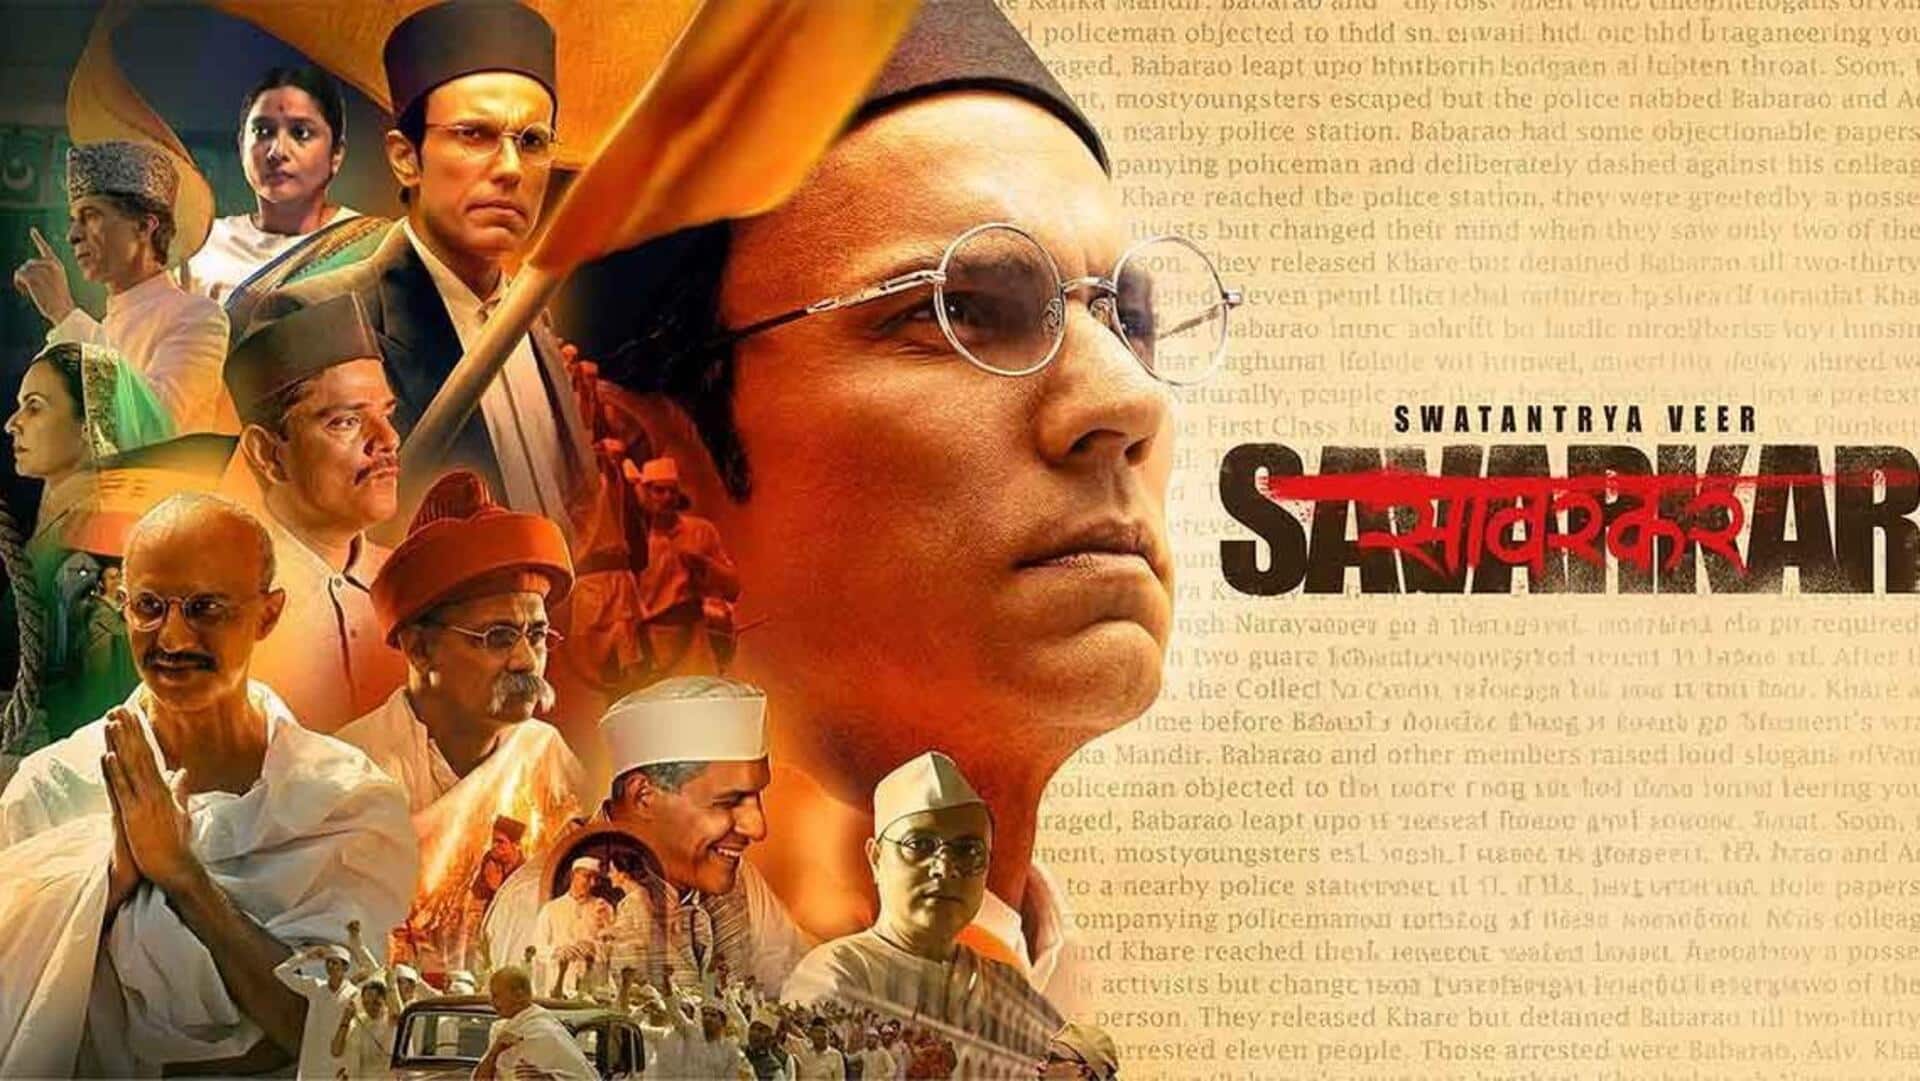 Box office collection: 'Swatantrya Veer Savarkar' struggles to stay afoot